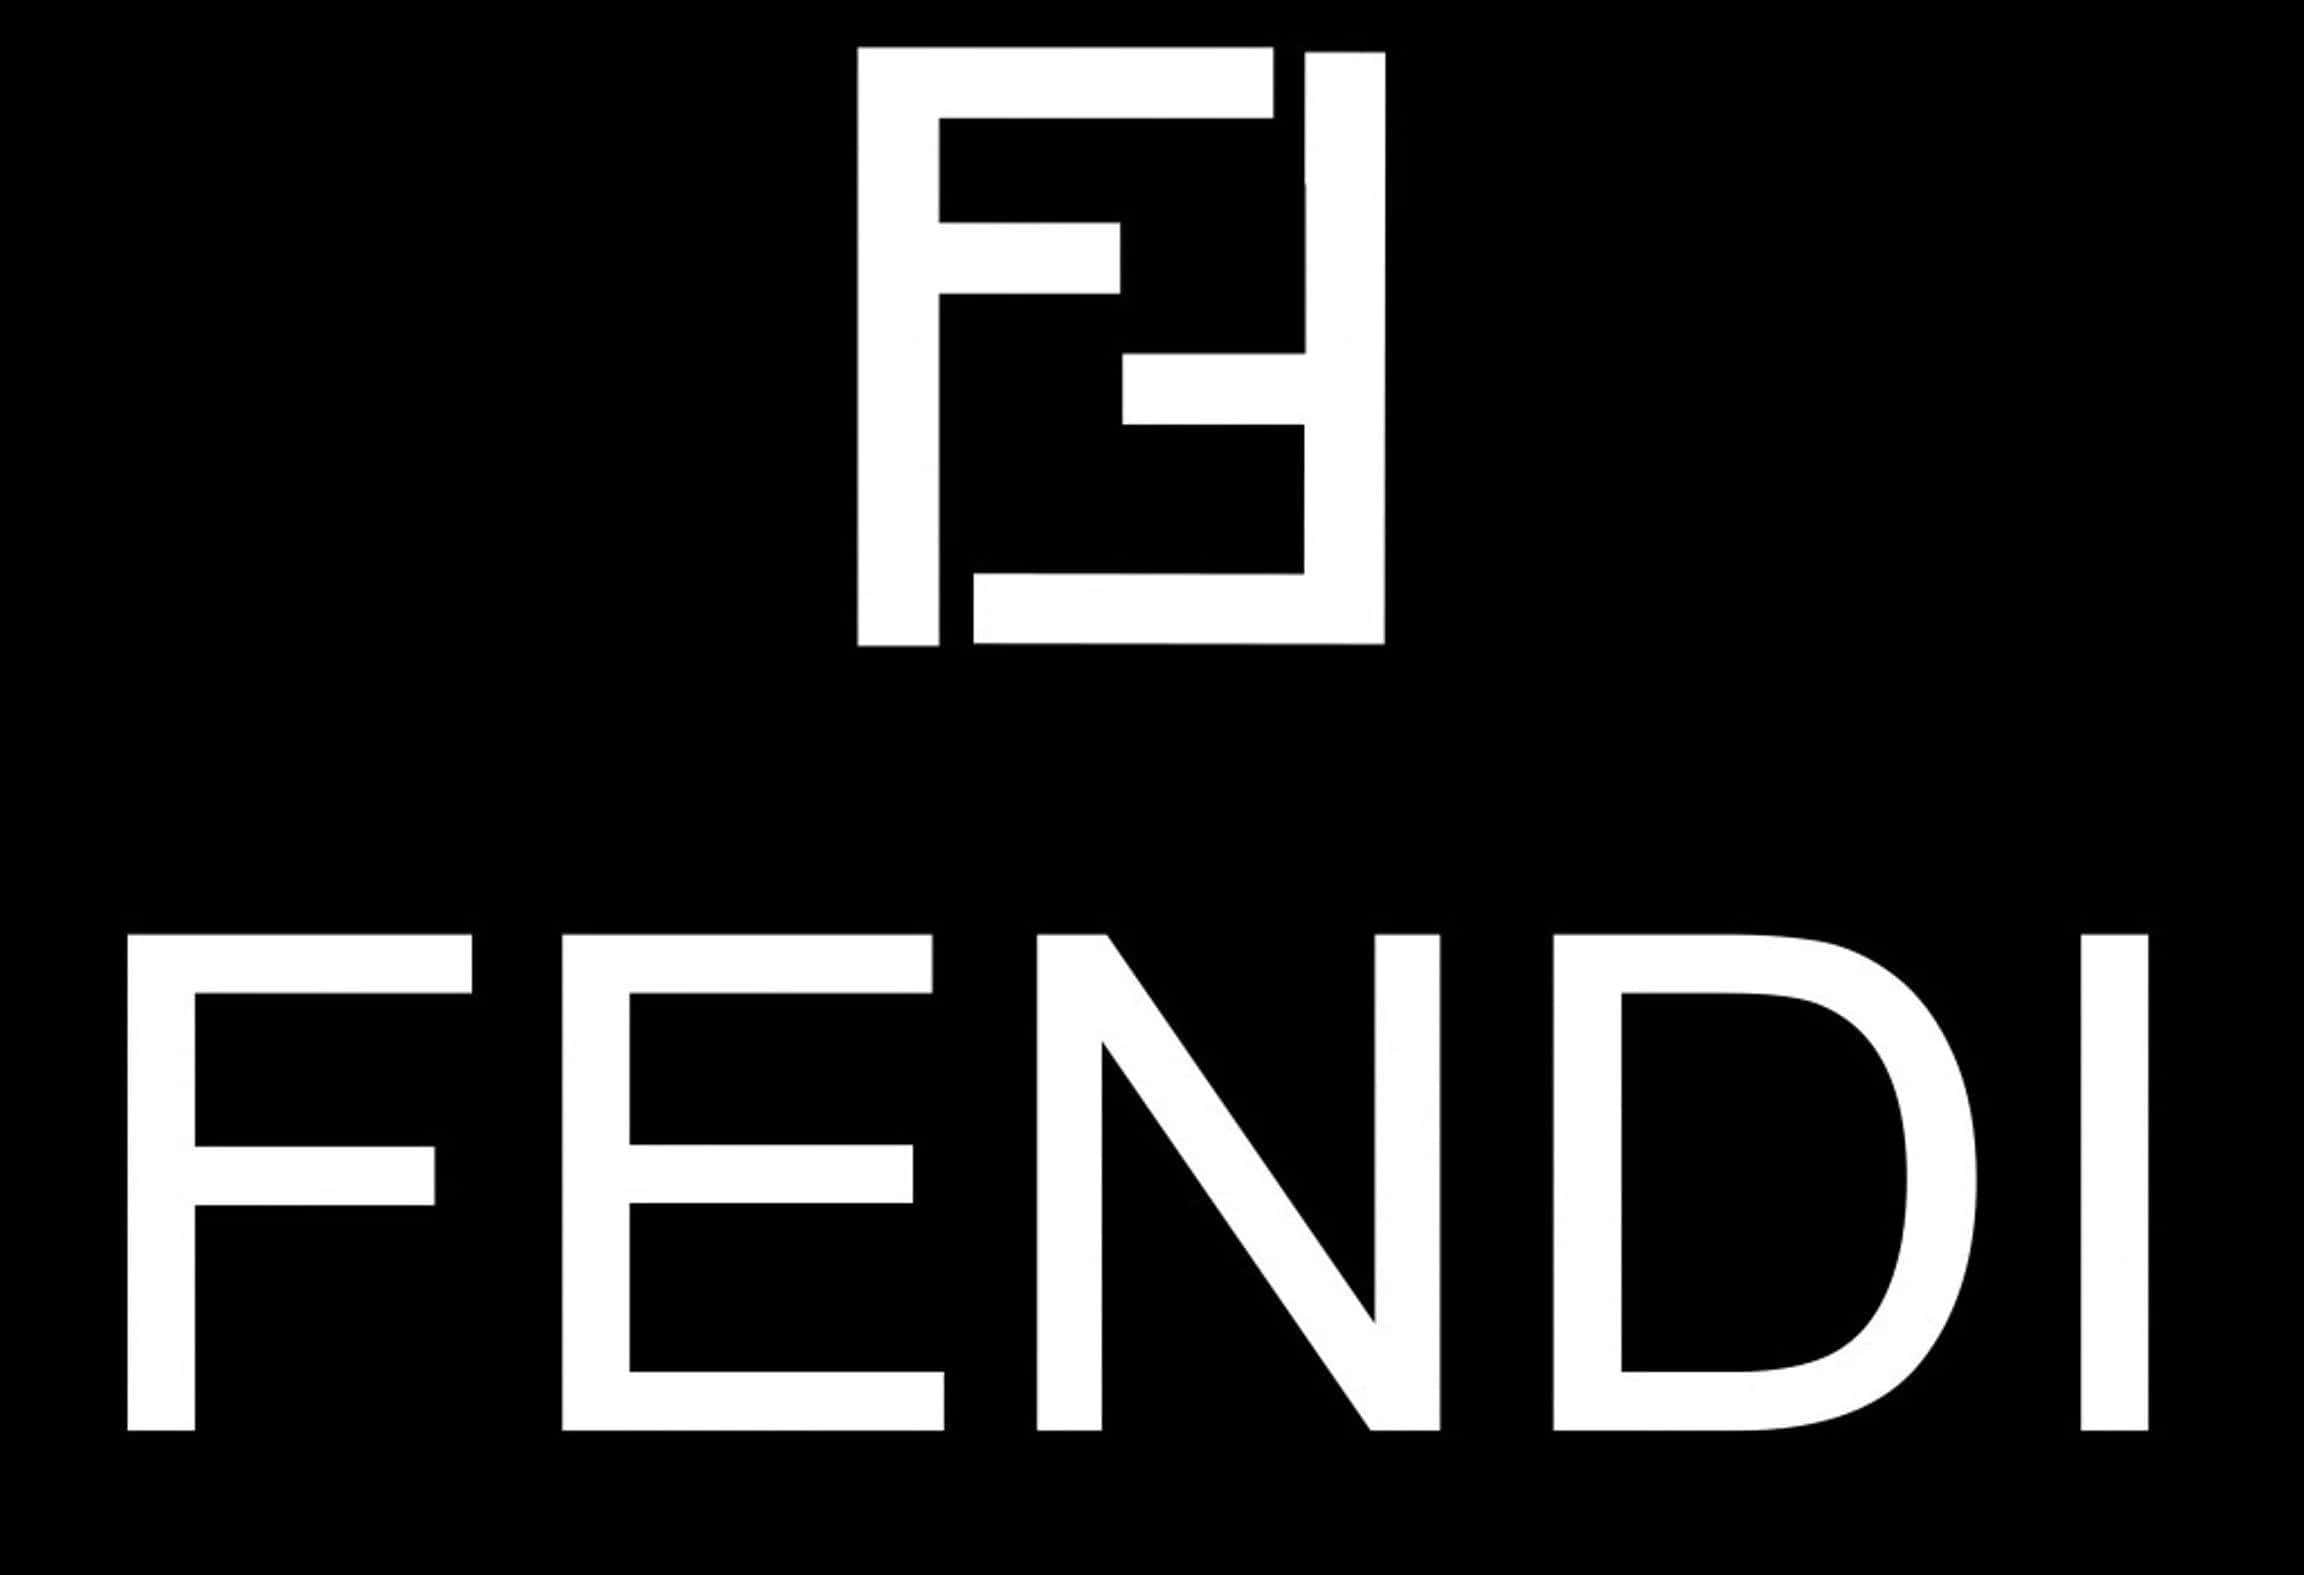 Enfendi-logotyp På En Livlig Rosa Bakgrund.